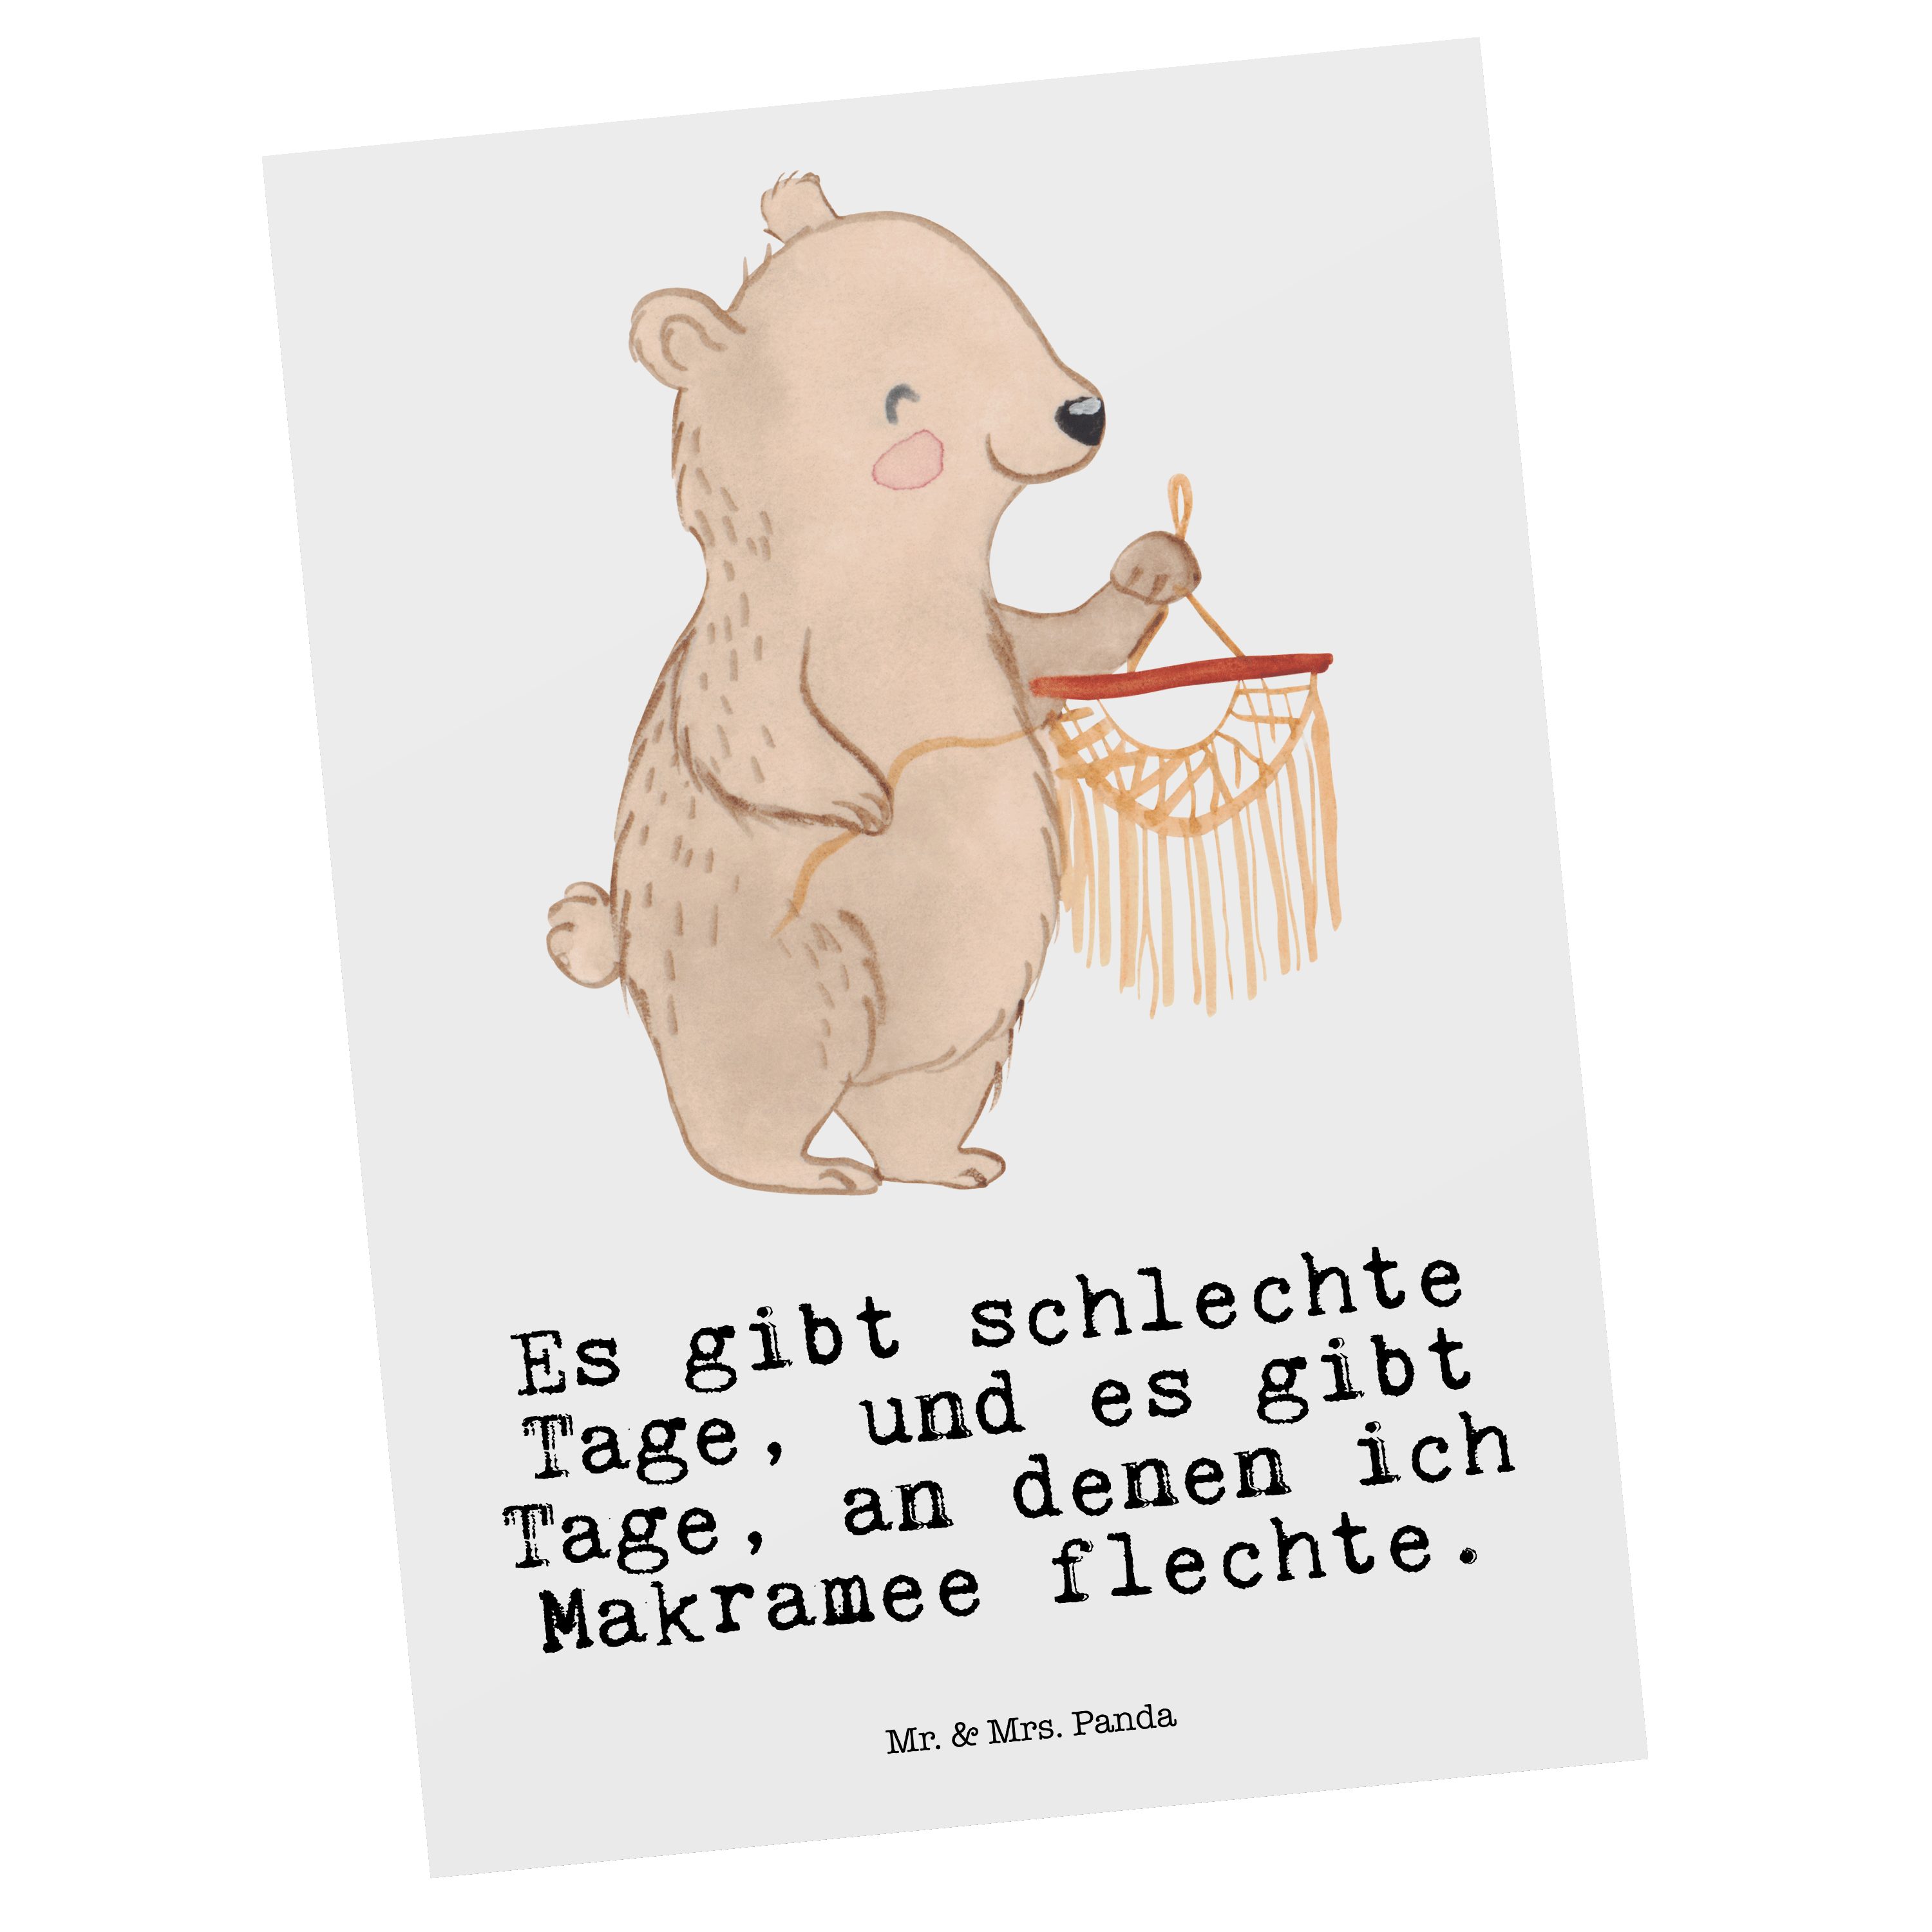 Mr. & Mrs. Panda Postkarte Bär Makramee Tage - Weiß - Geschenk, Danke, Geburtstagskarte, Einladu